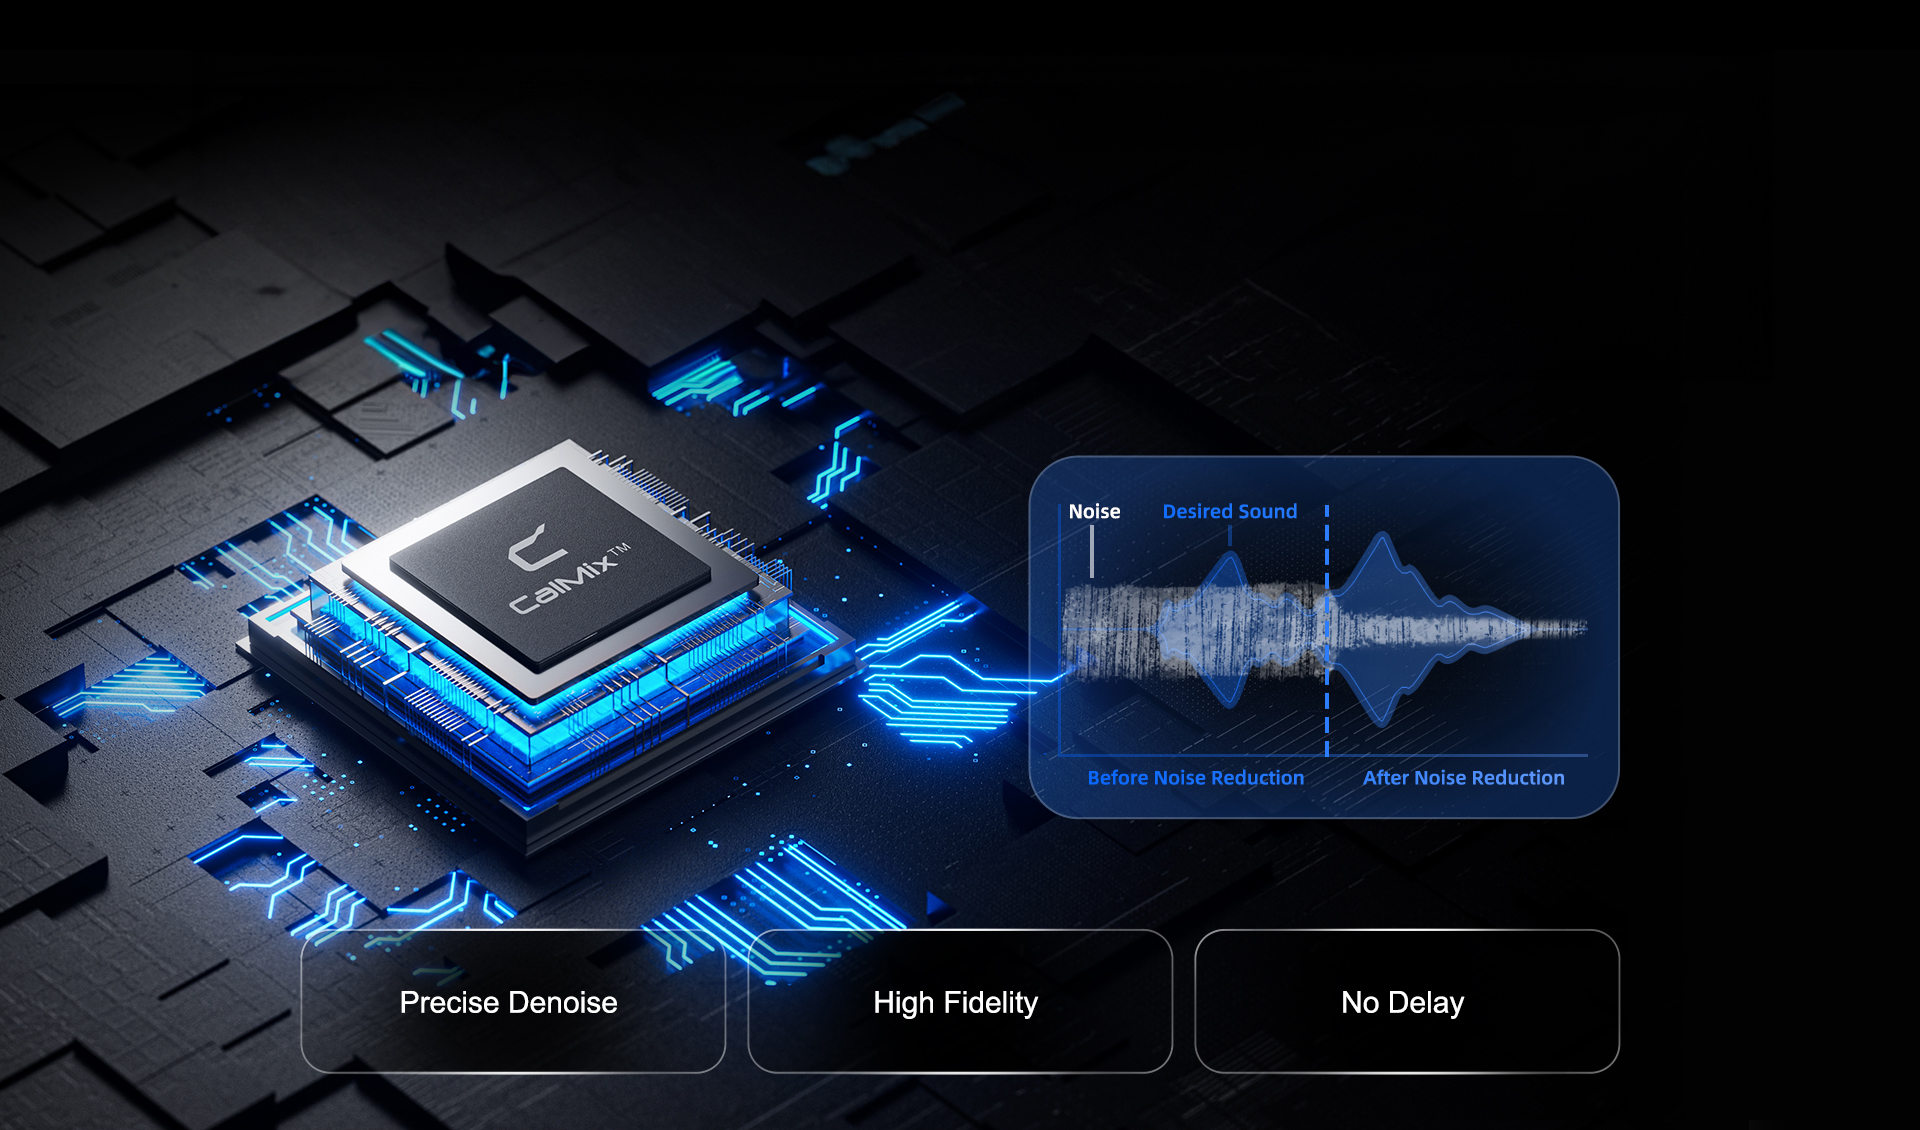 Brand-new CalMix Audio Processing, One-key Denoise